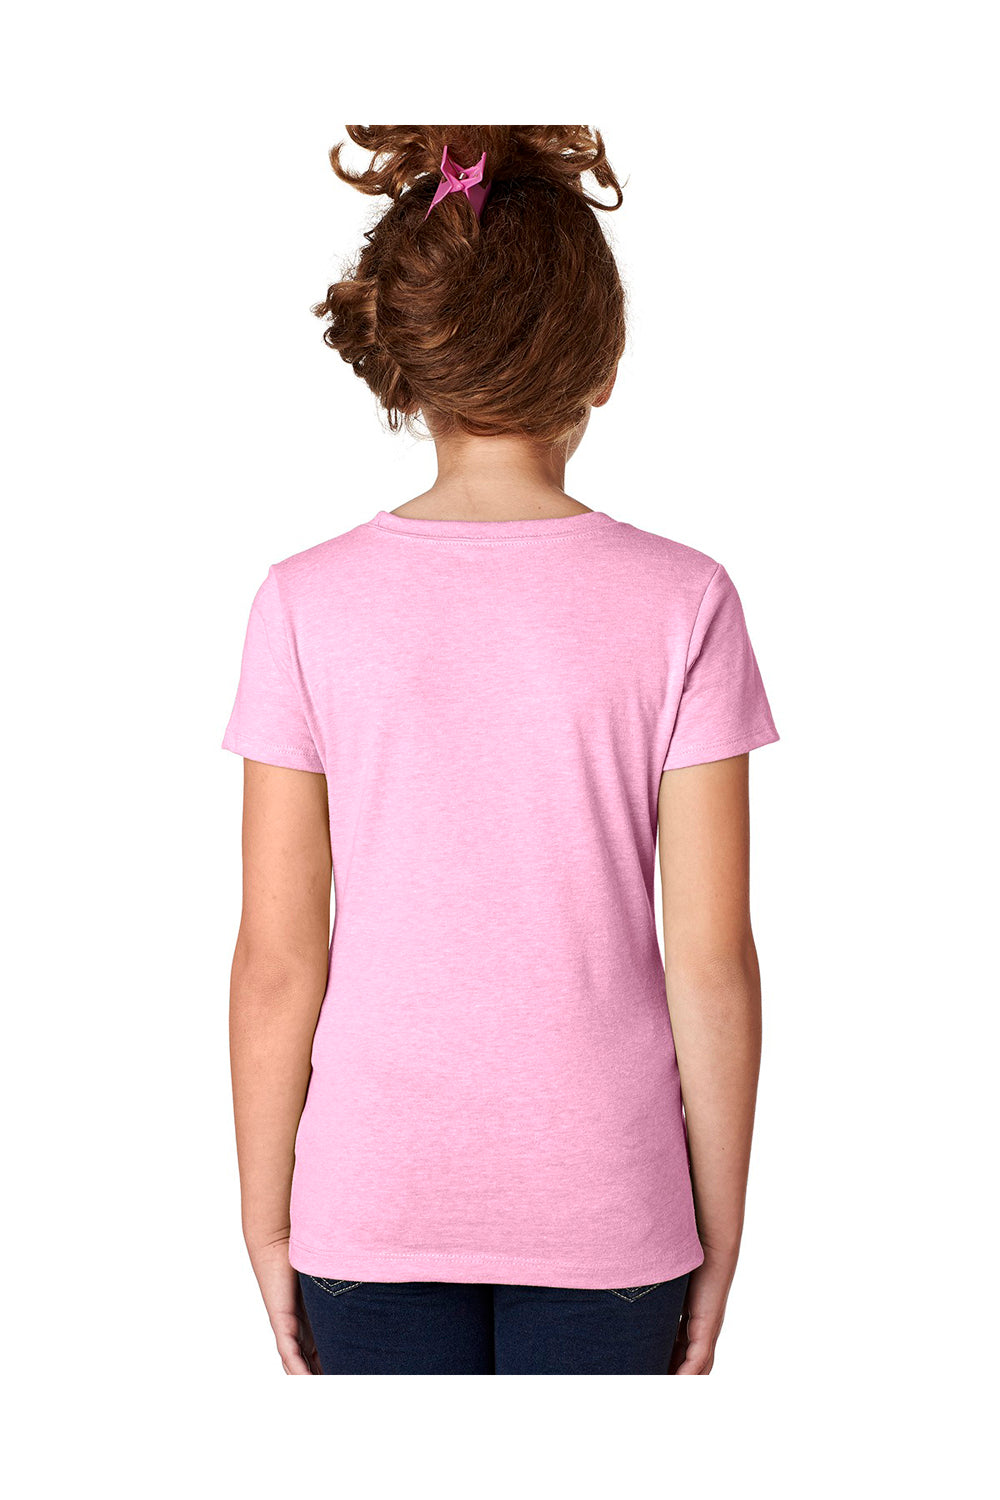 Next Level 3712 Youth Princess CVC Jersey Short Sleeve Crewneck T-Shirt Lilac Pink Back